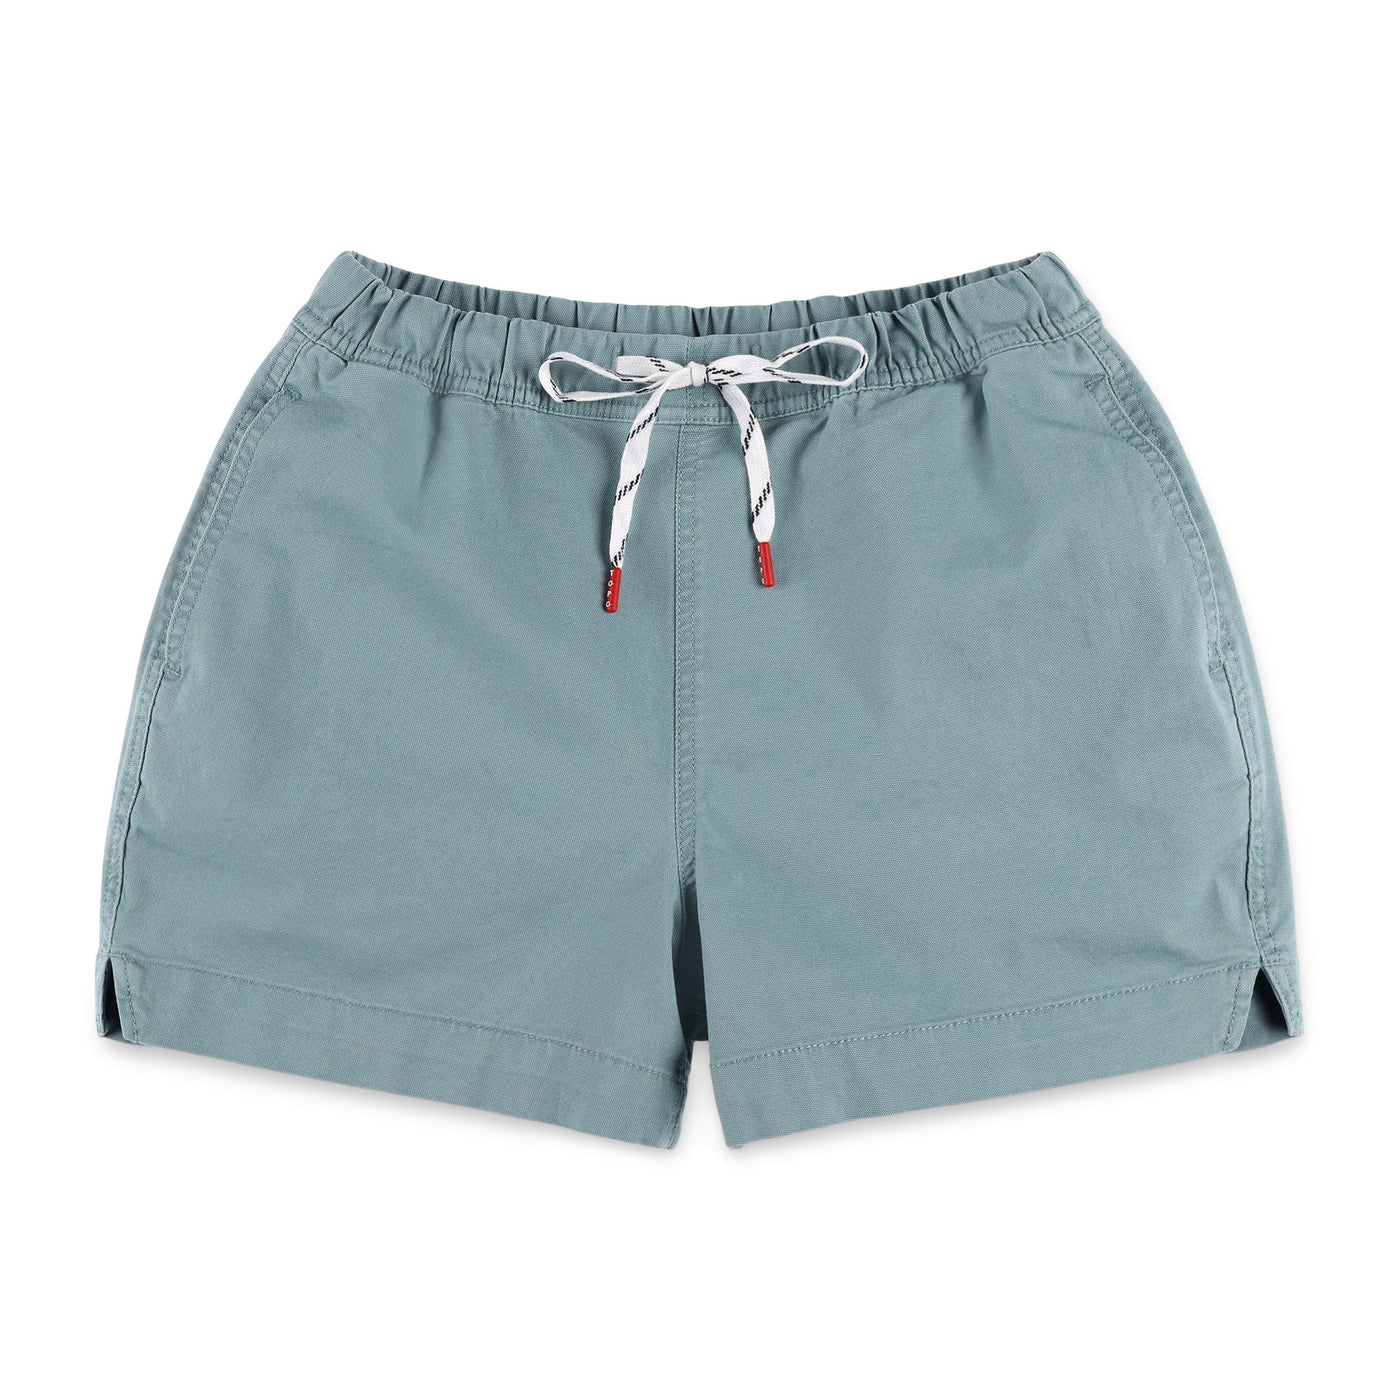 Topo Designs Women's drawstring Dirt Shorts in 100% organic cotton "Sage" blue green.